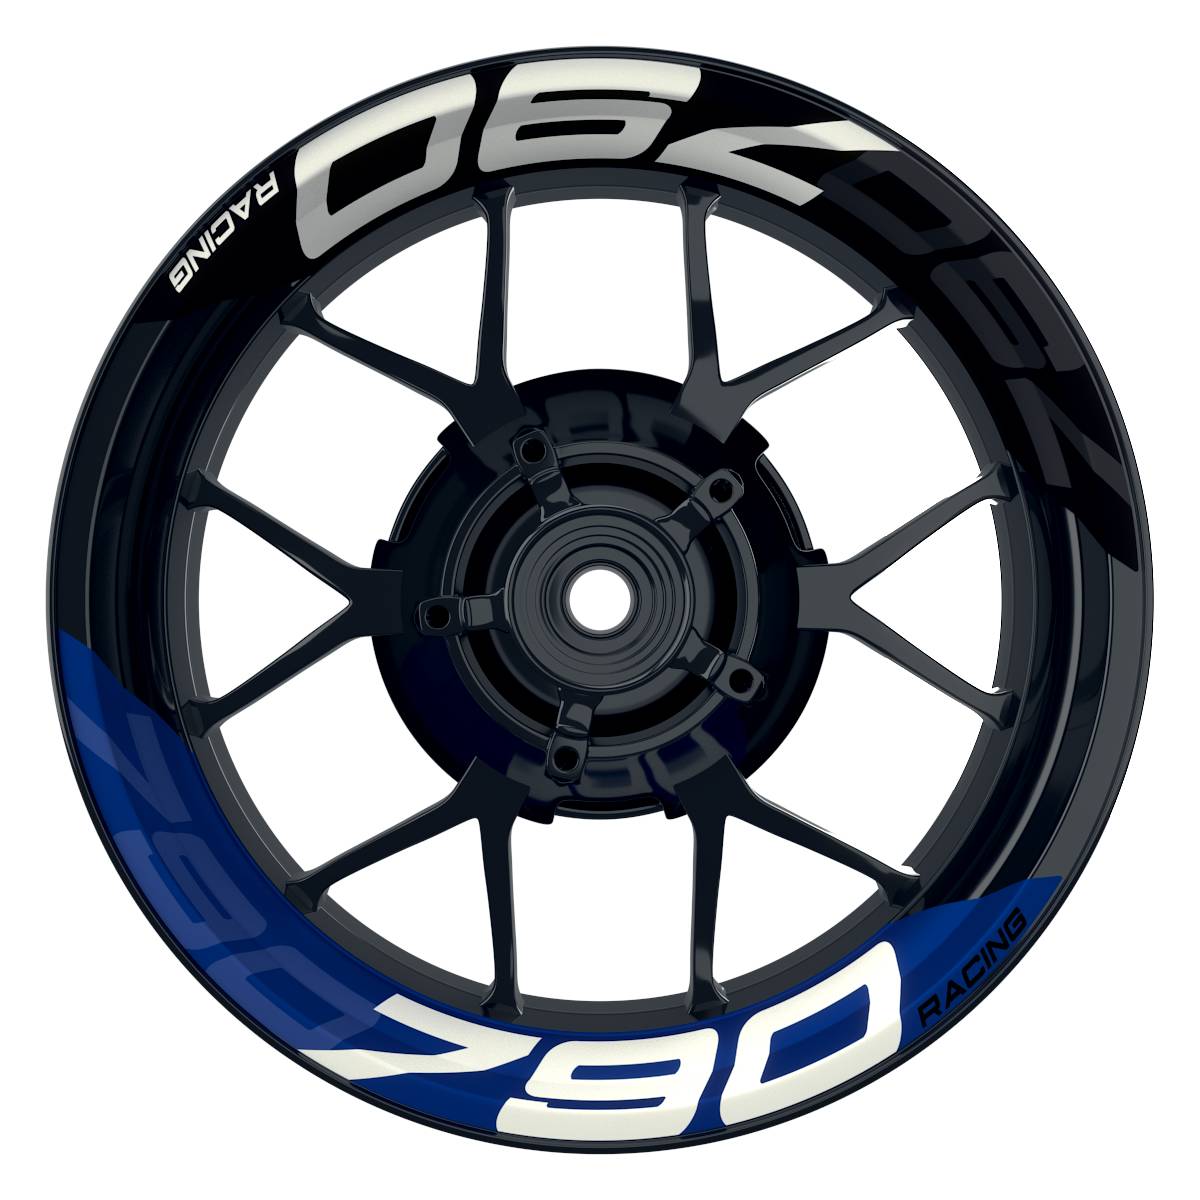 Wheelsticker Felgenaufkleber KTM Racing 790 halb halb V2 schwarz blau Frontansicht